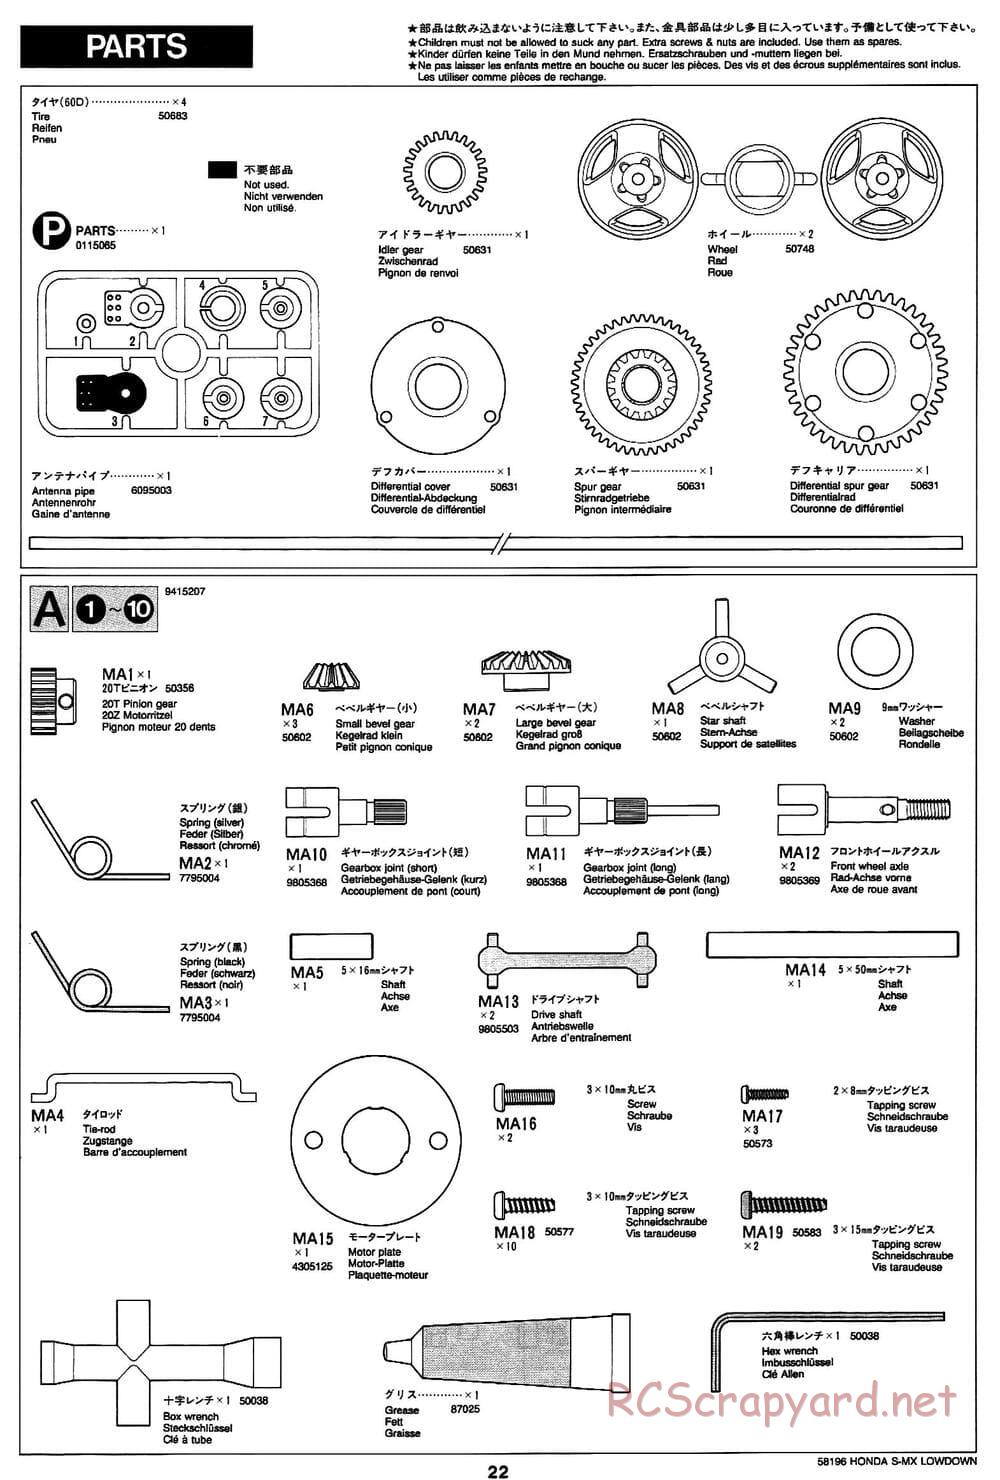 Tamiya - Honda S-MX Lowdown - M01 Chassis - Manual - Page 22